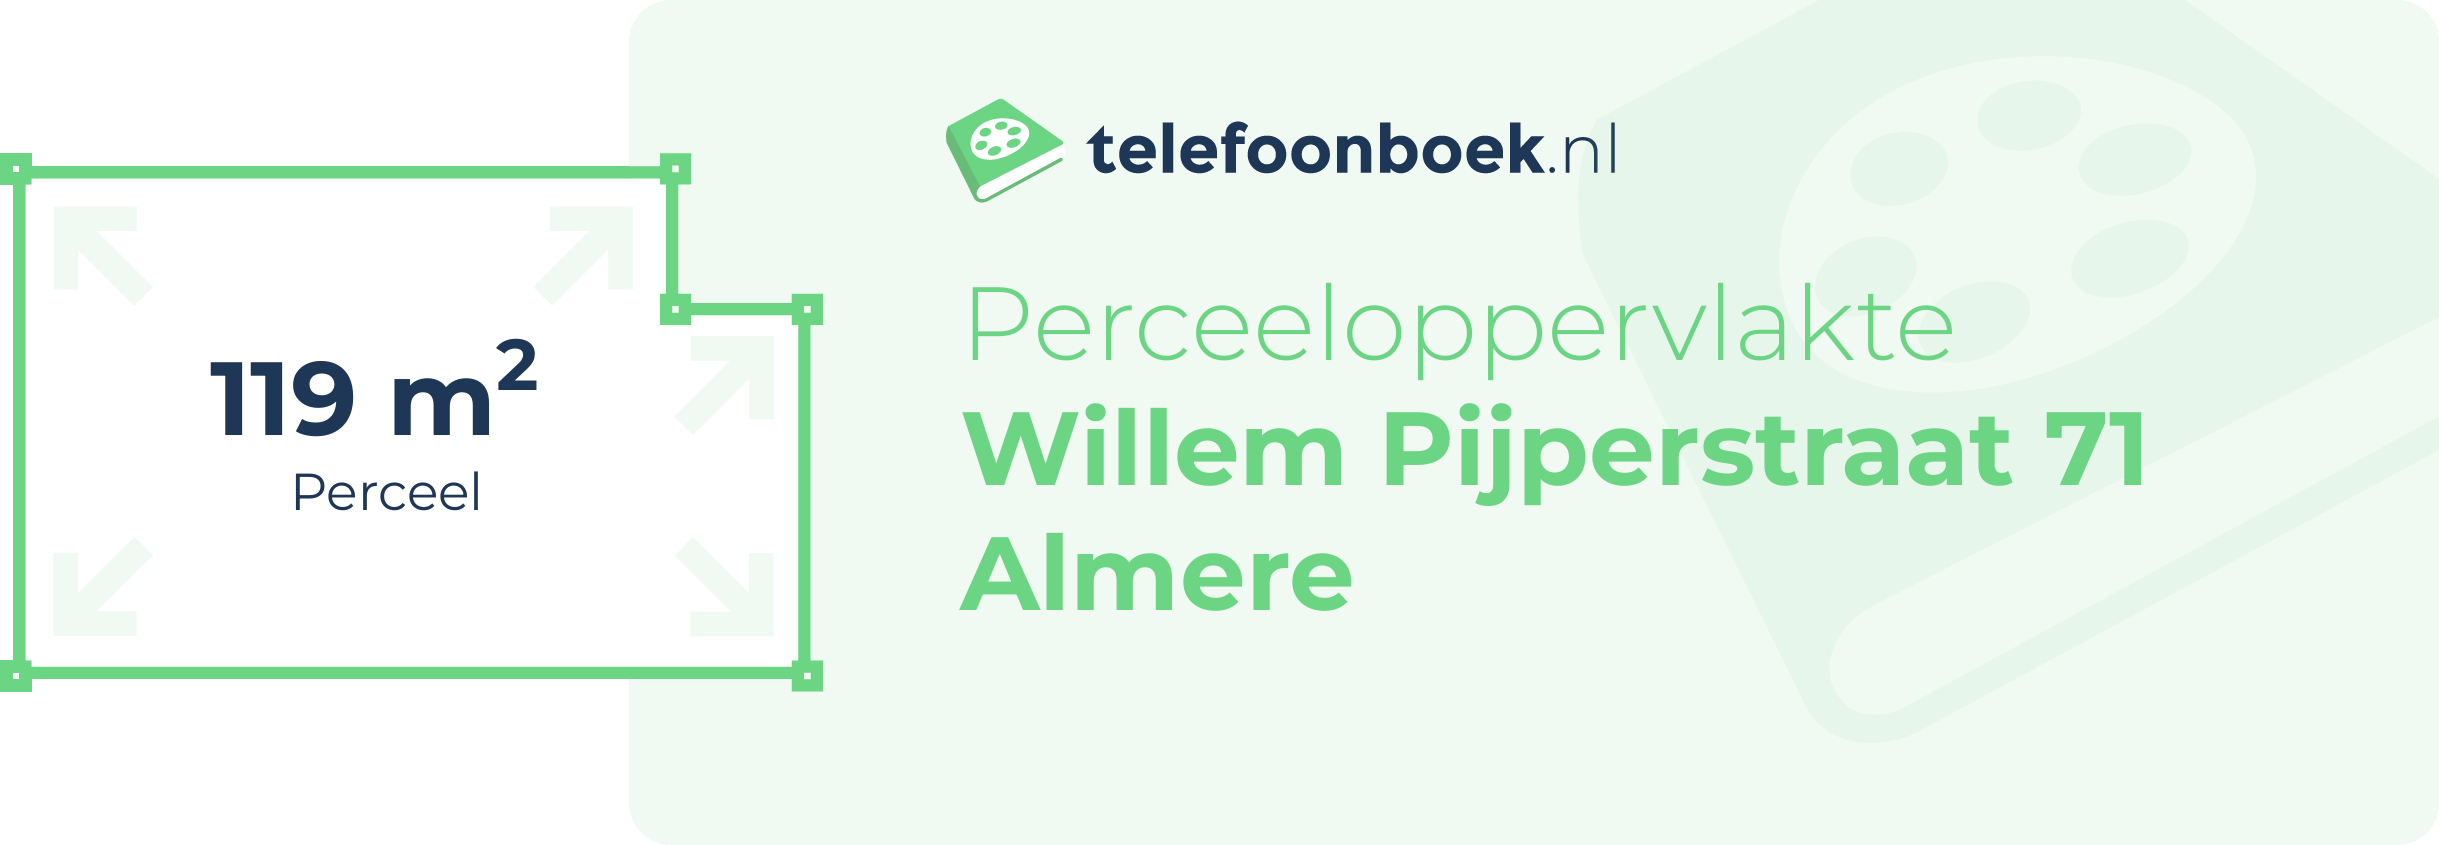 Perceeloppervlakte Willem Pijperstraat 71 Almere